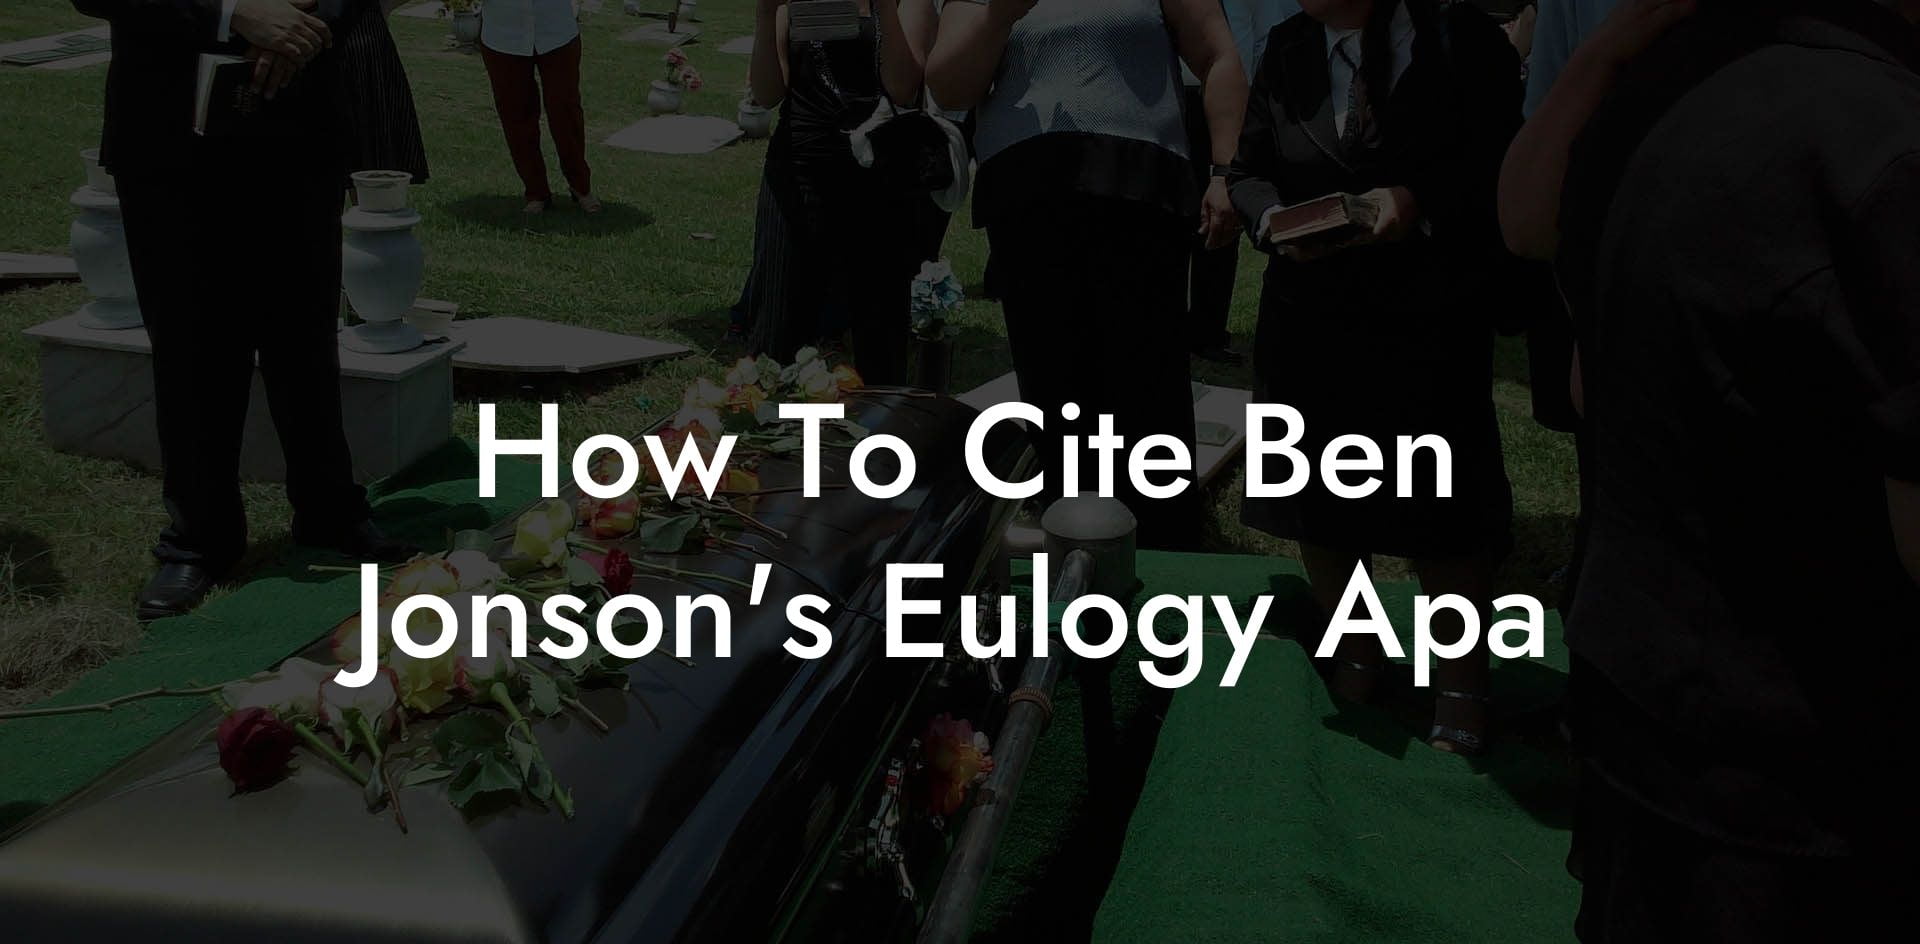 How To Cite Ben Jonson's Eulogy Apa